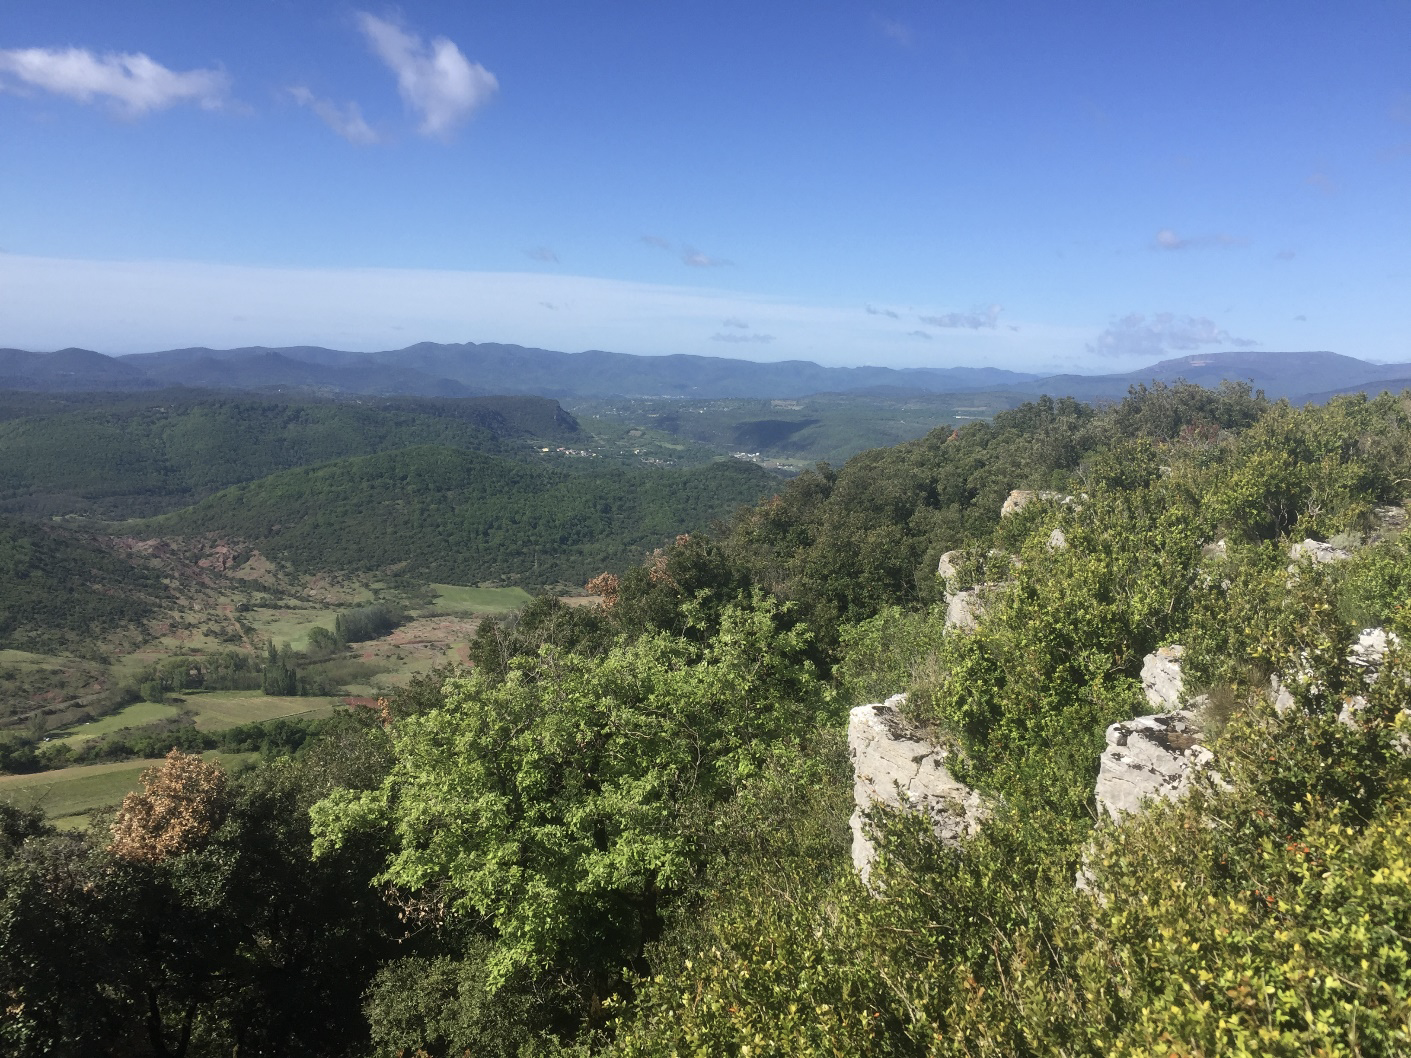 280 km cycling tour to discover the South of Occitania